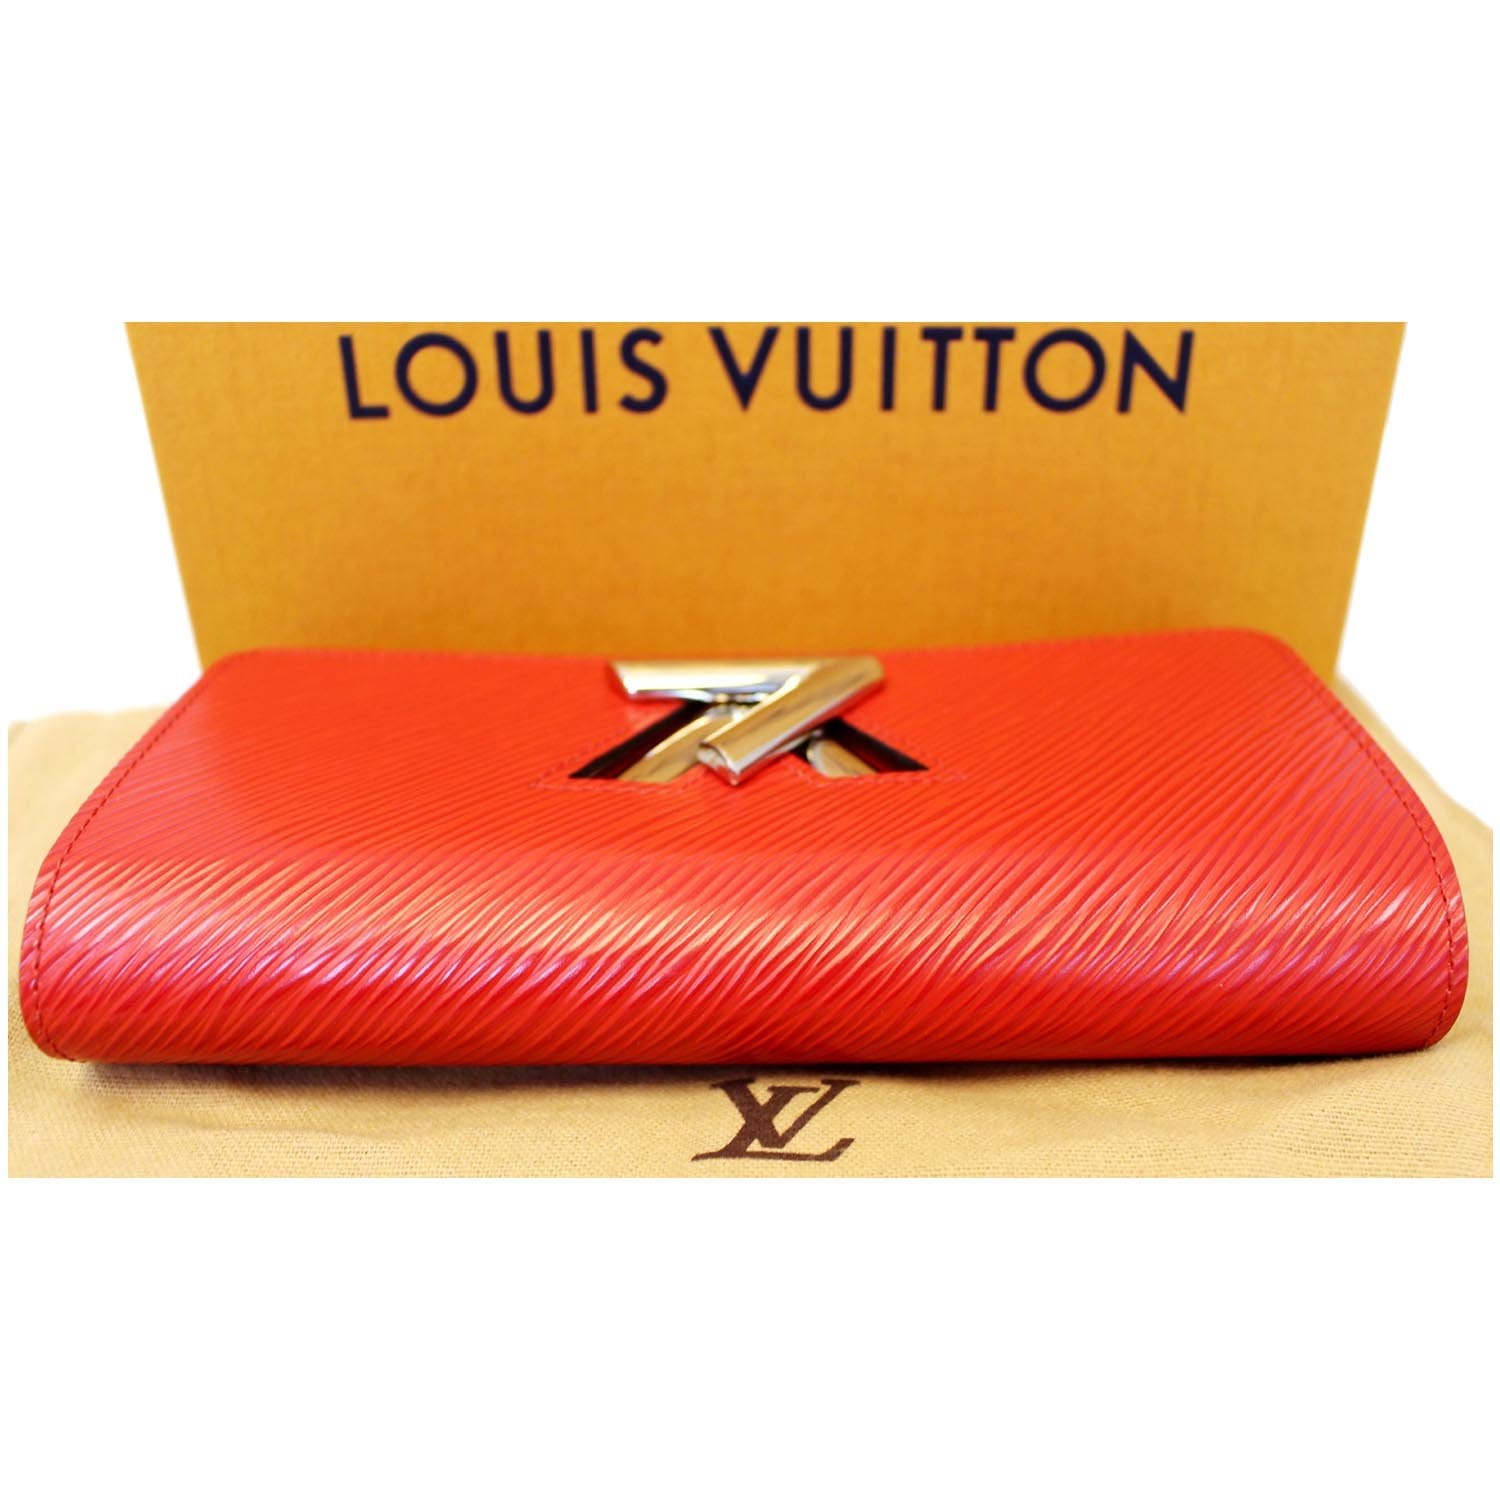 Handbags Louis Vuitton New Louis Vuitton Wallet on Chain Twist Handbag in EPI Woc Bag Leather